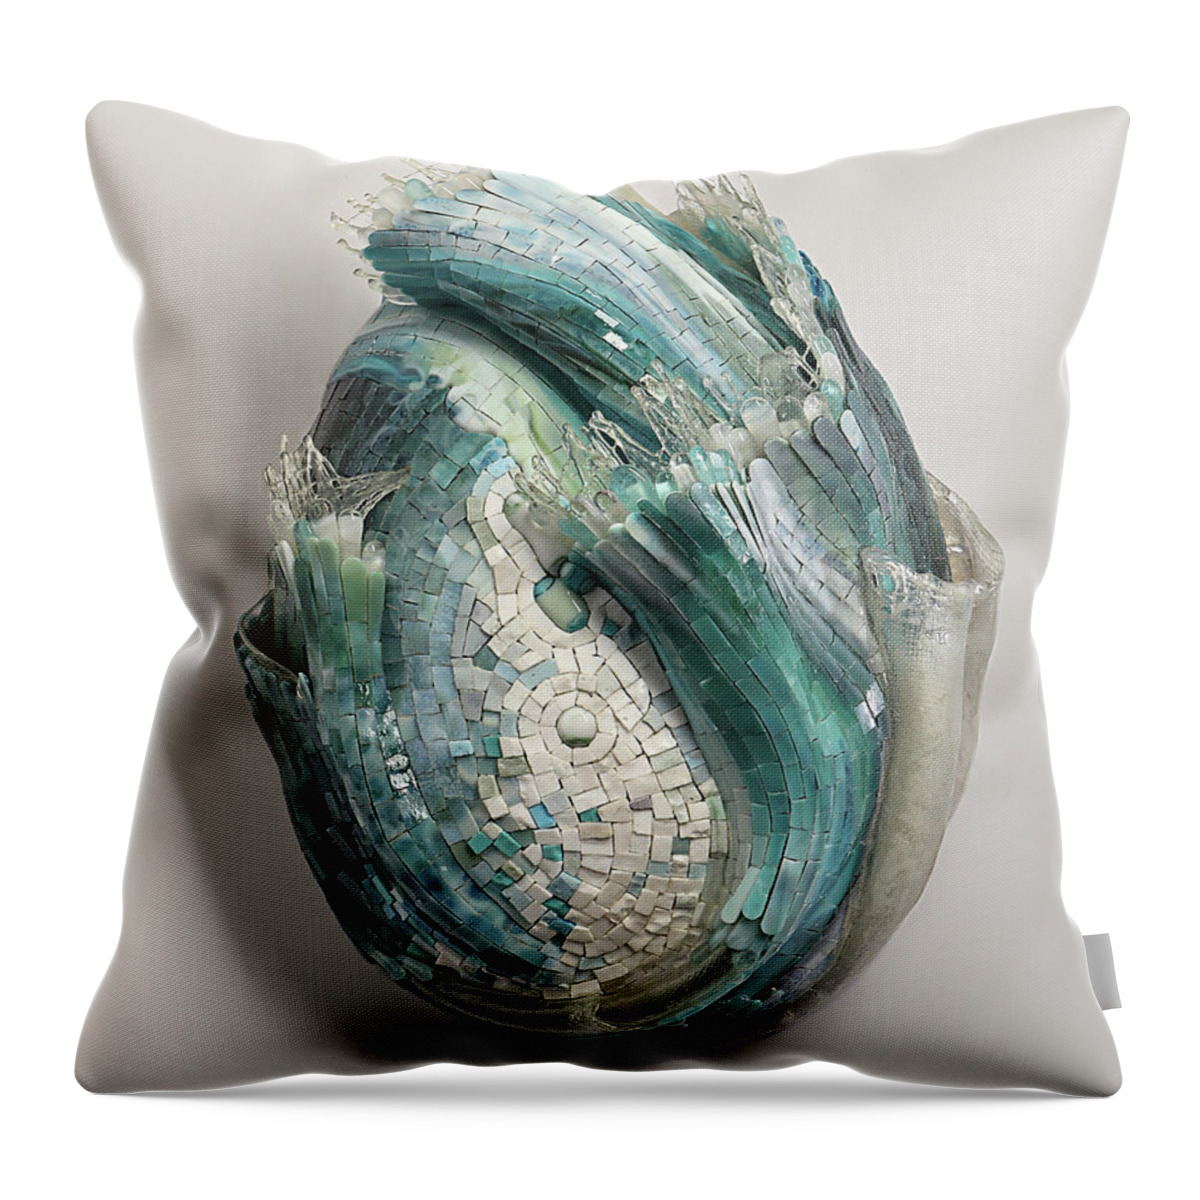 Water Throw Pillow featuring the glass art Crysalis III by Mia Tavonatti